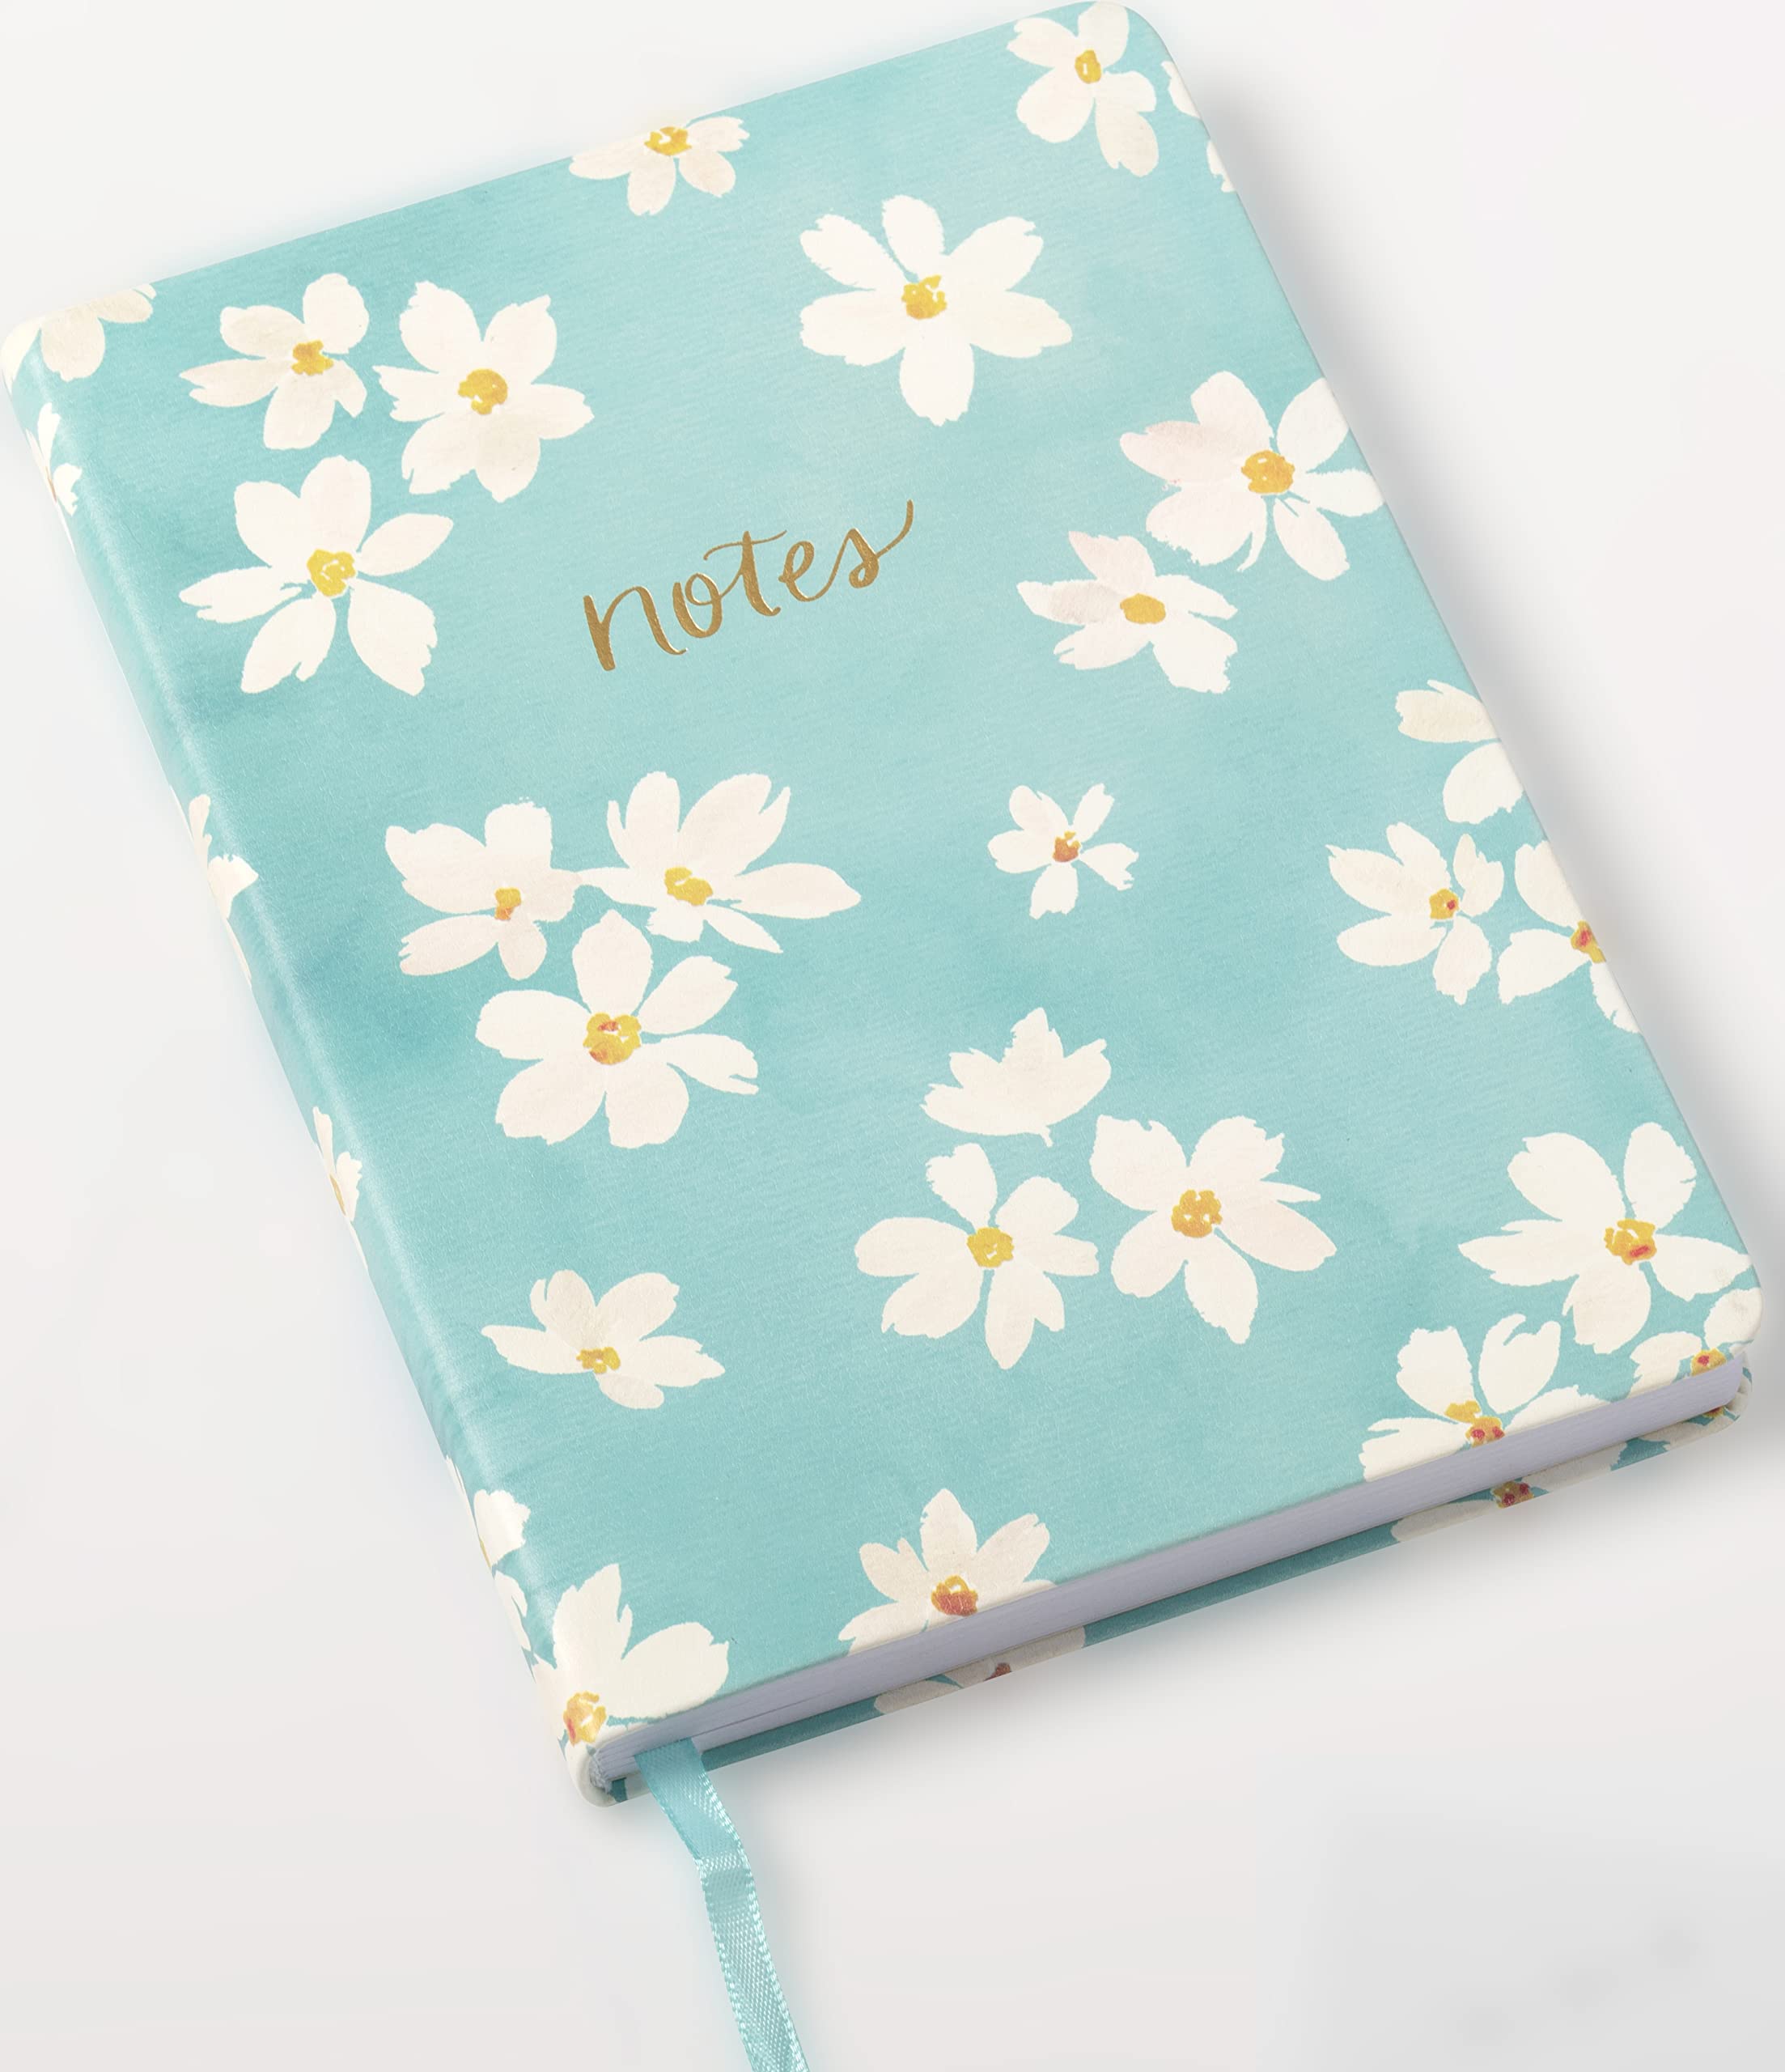 Flexi-Cover Medium Daisy Notes